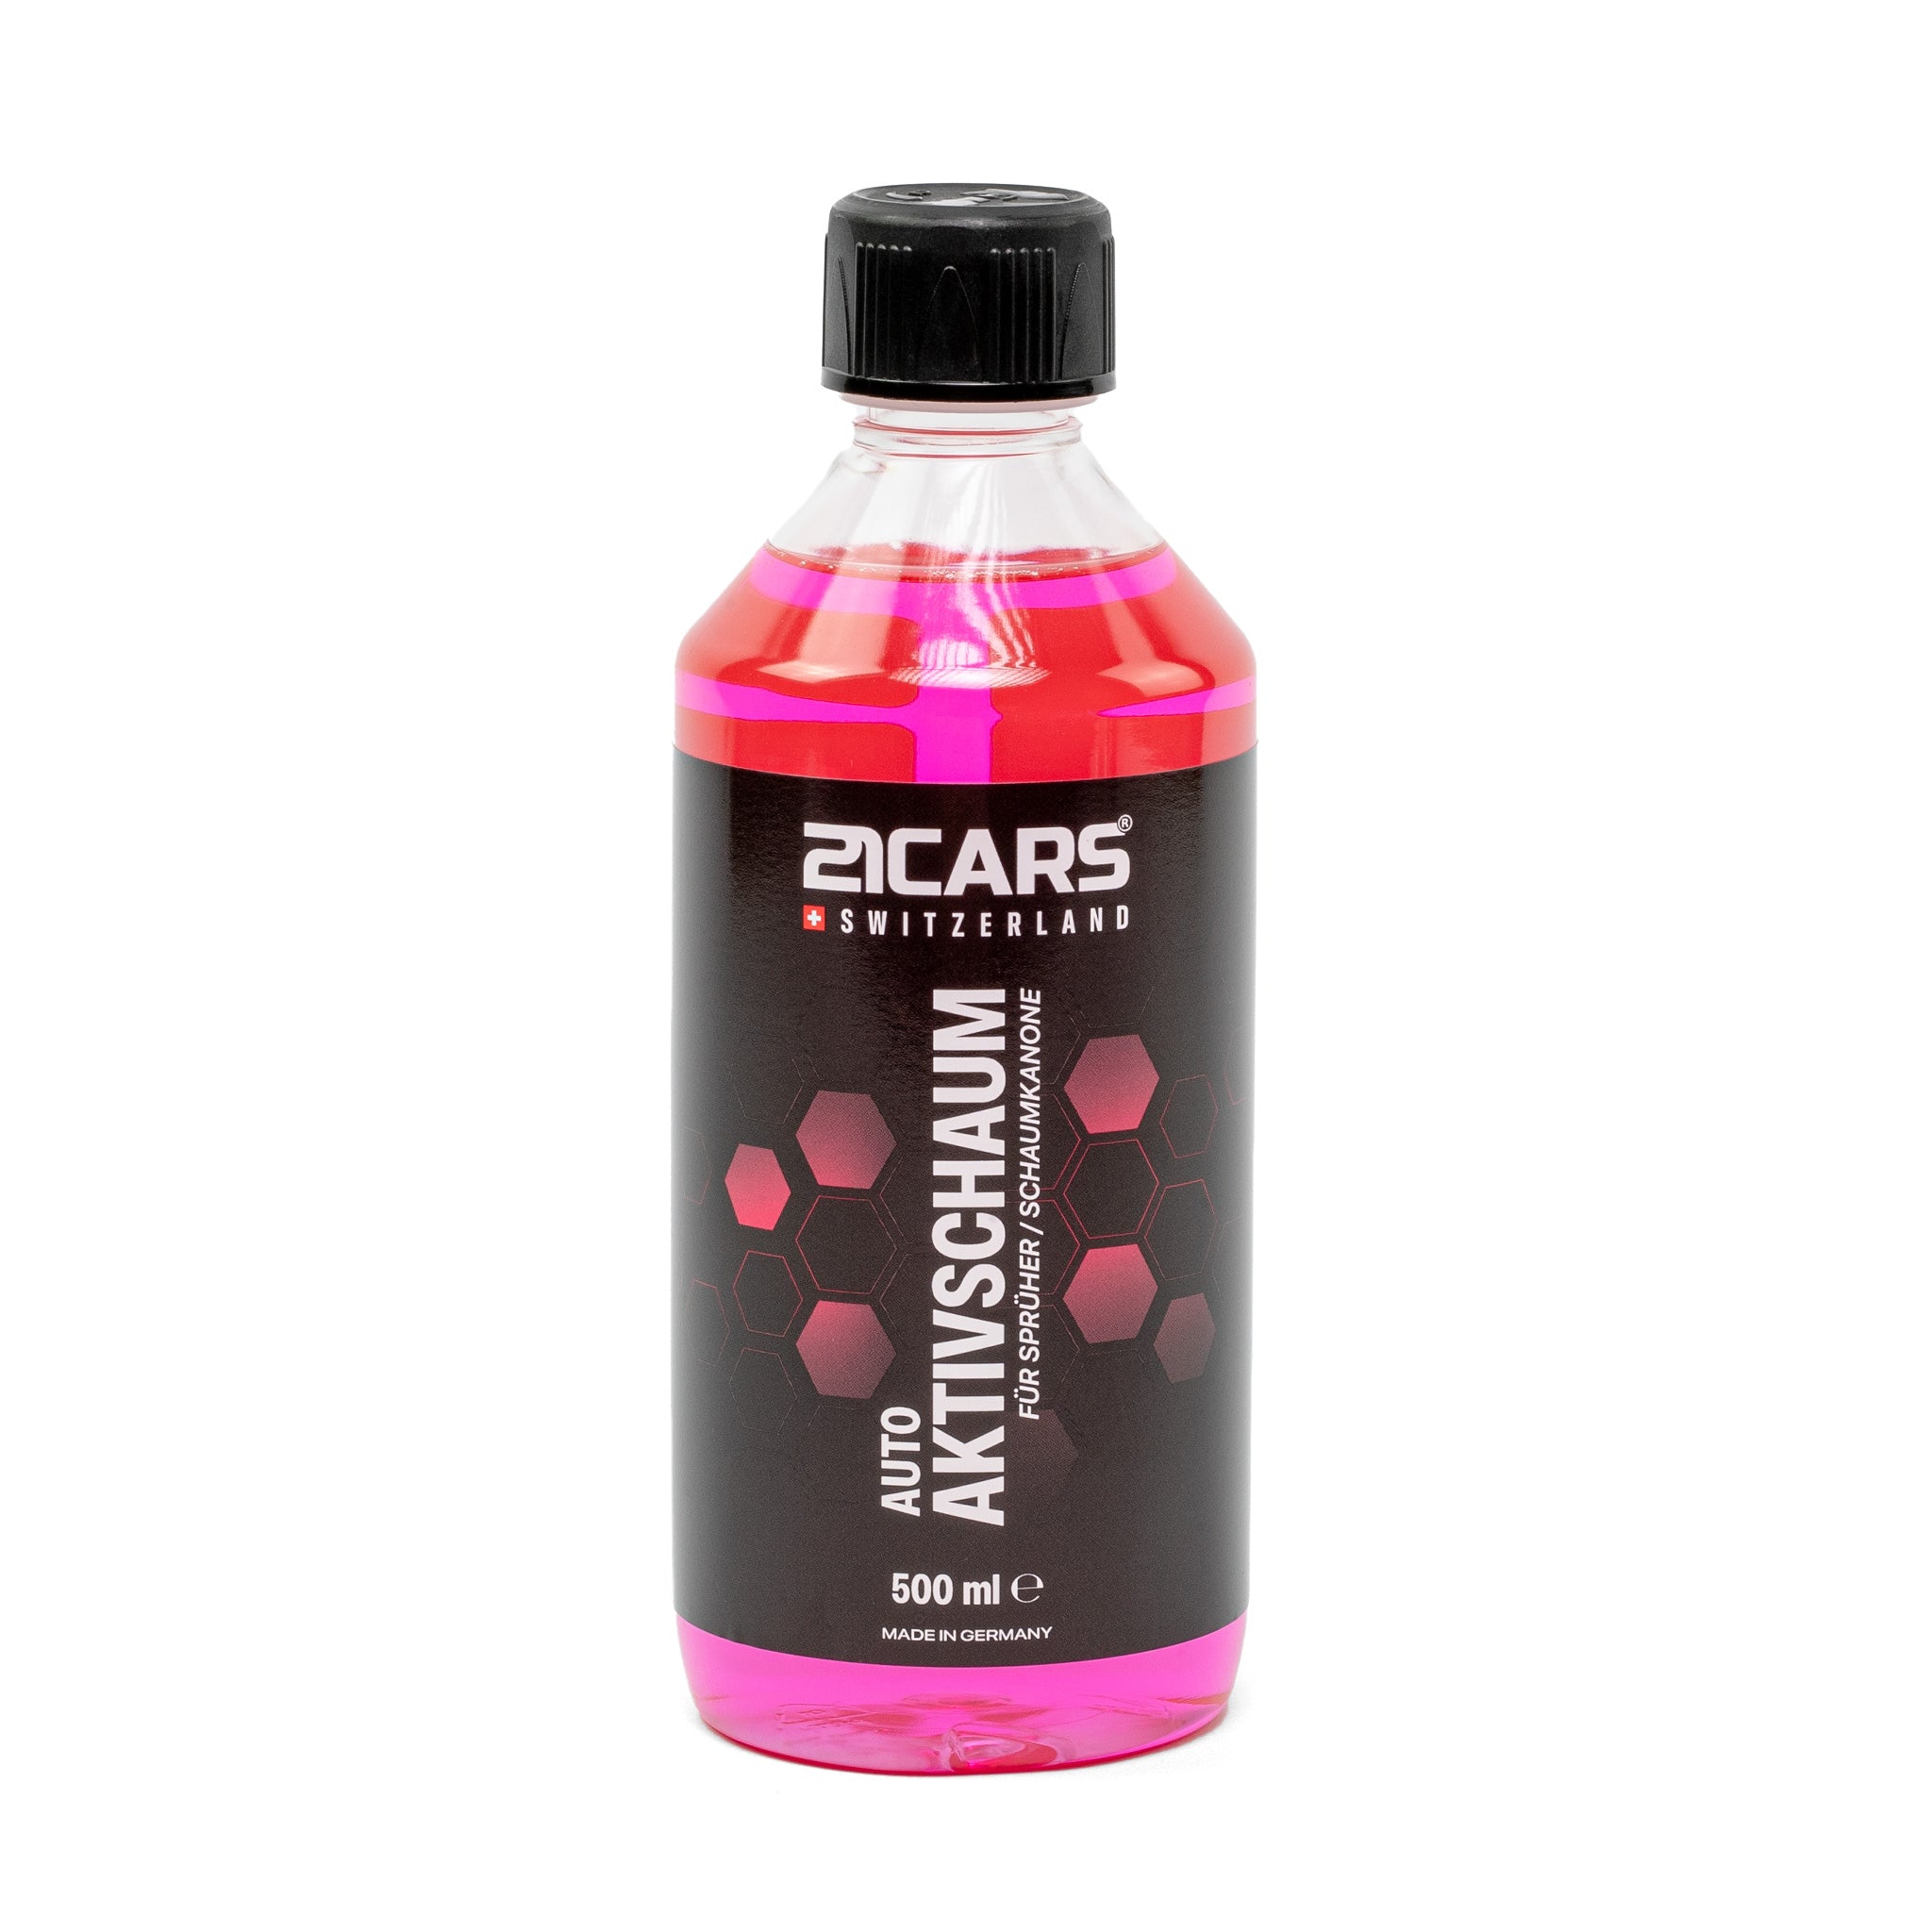 21CARS® Active Foam Cleaner 0.5 liters | Raspberry